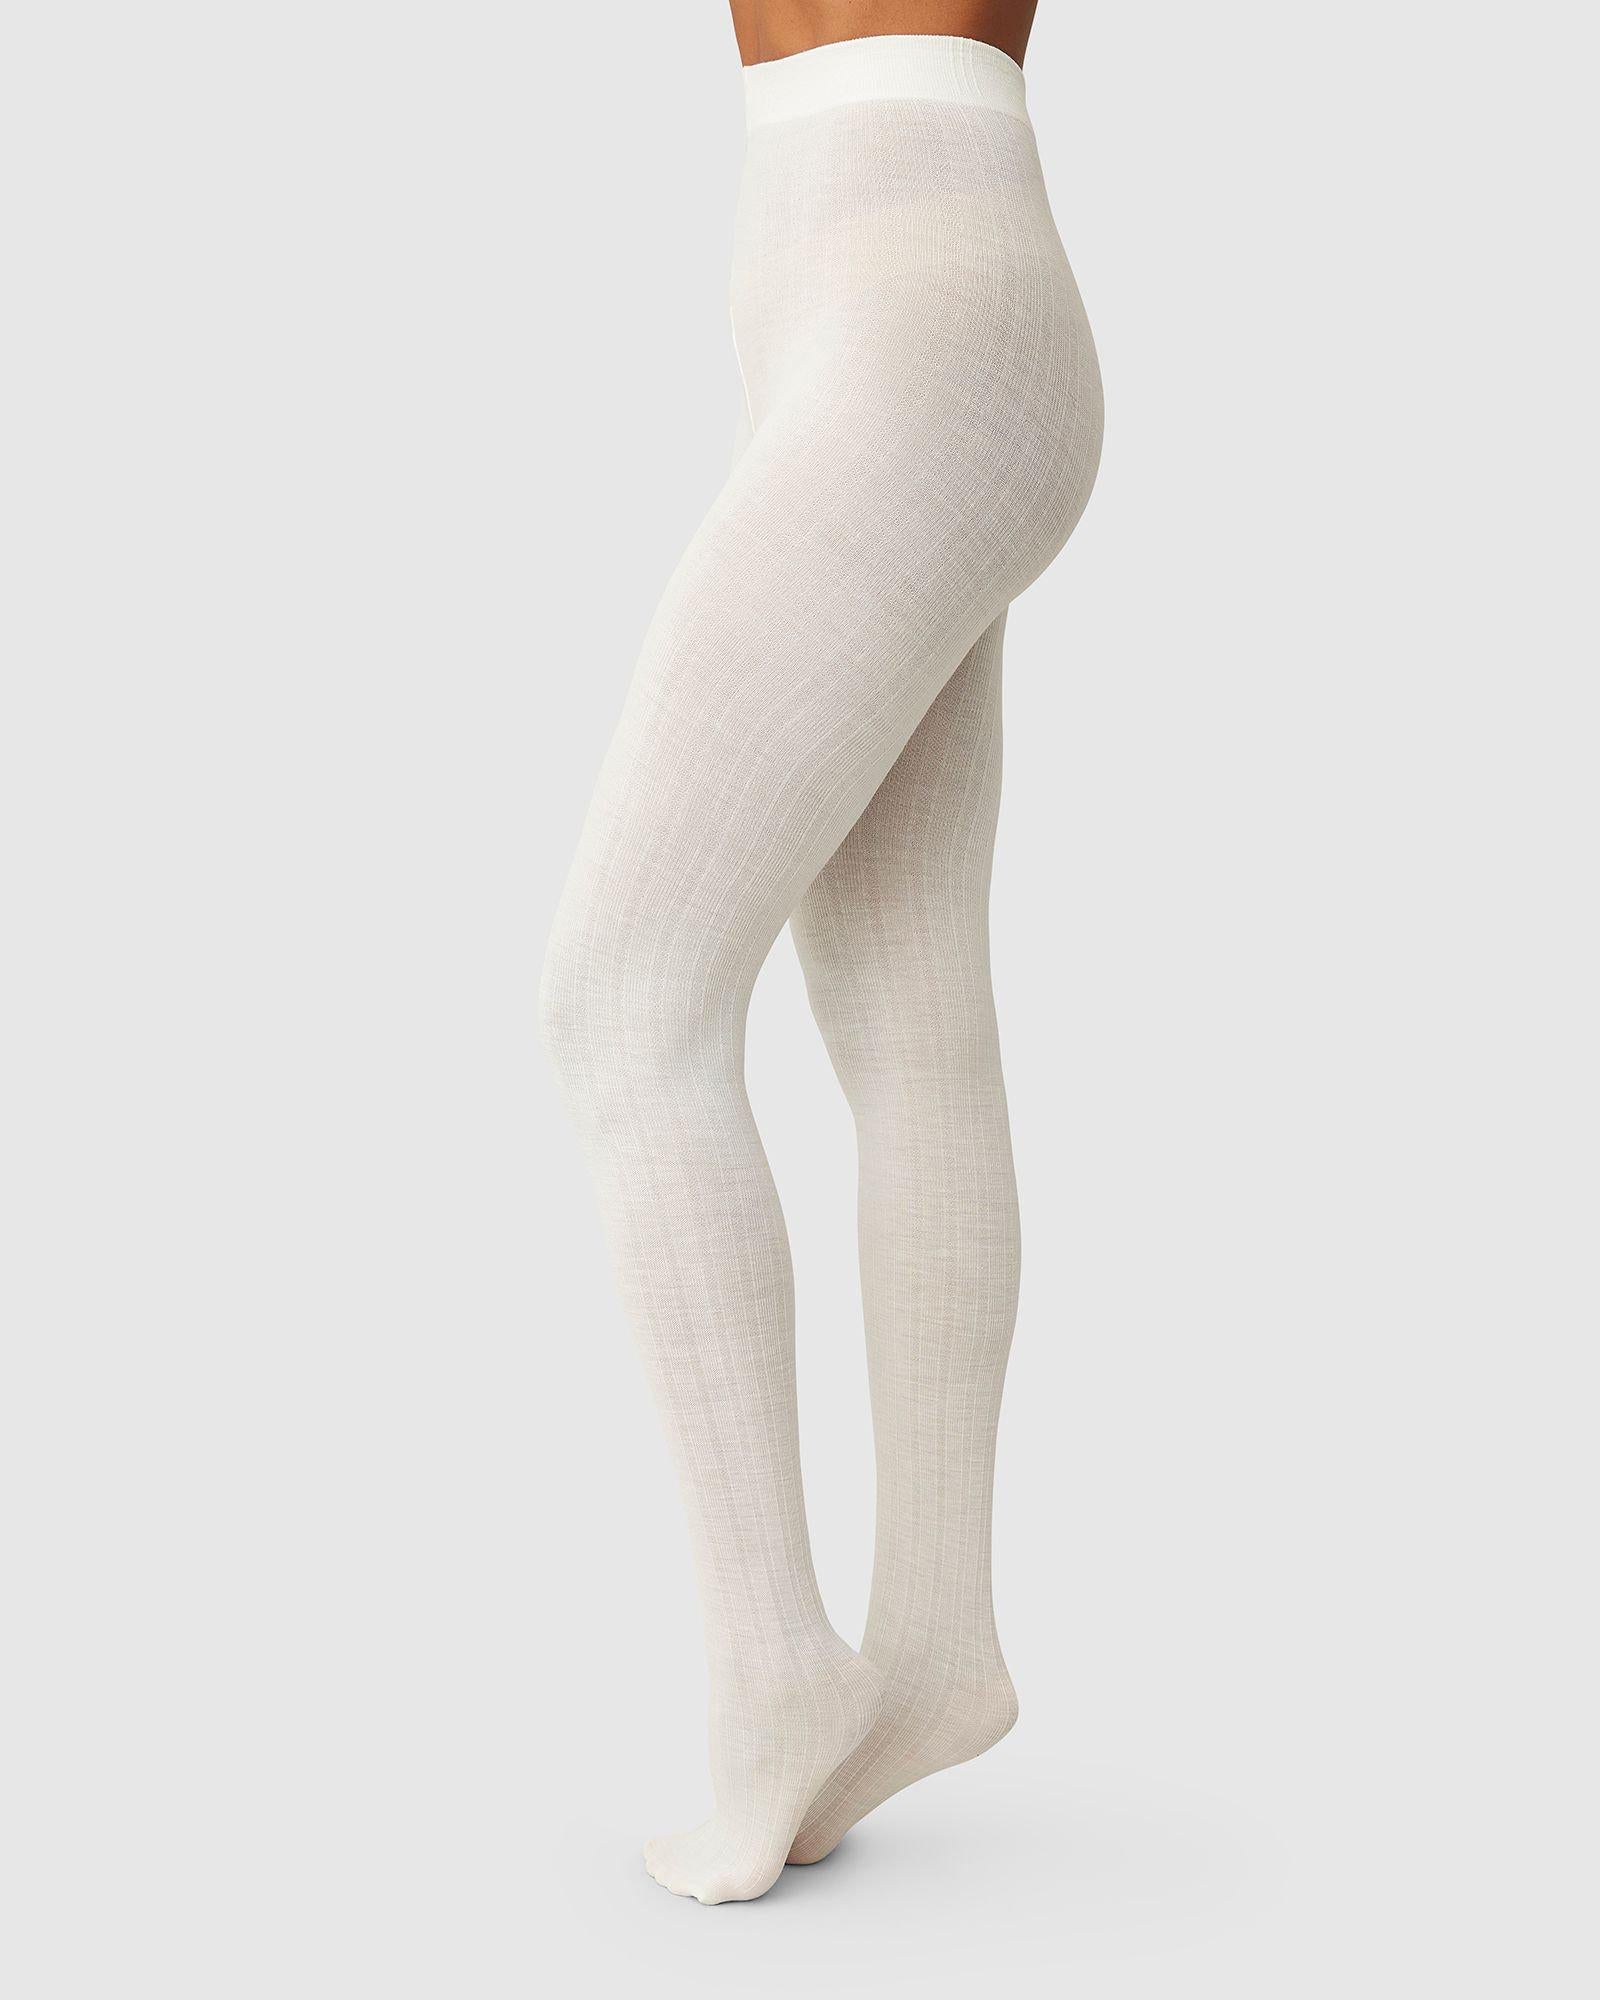 Hue White Ivory Leggings Size XL - 50% off